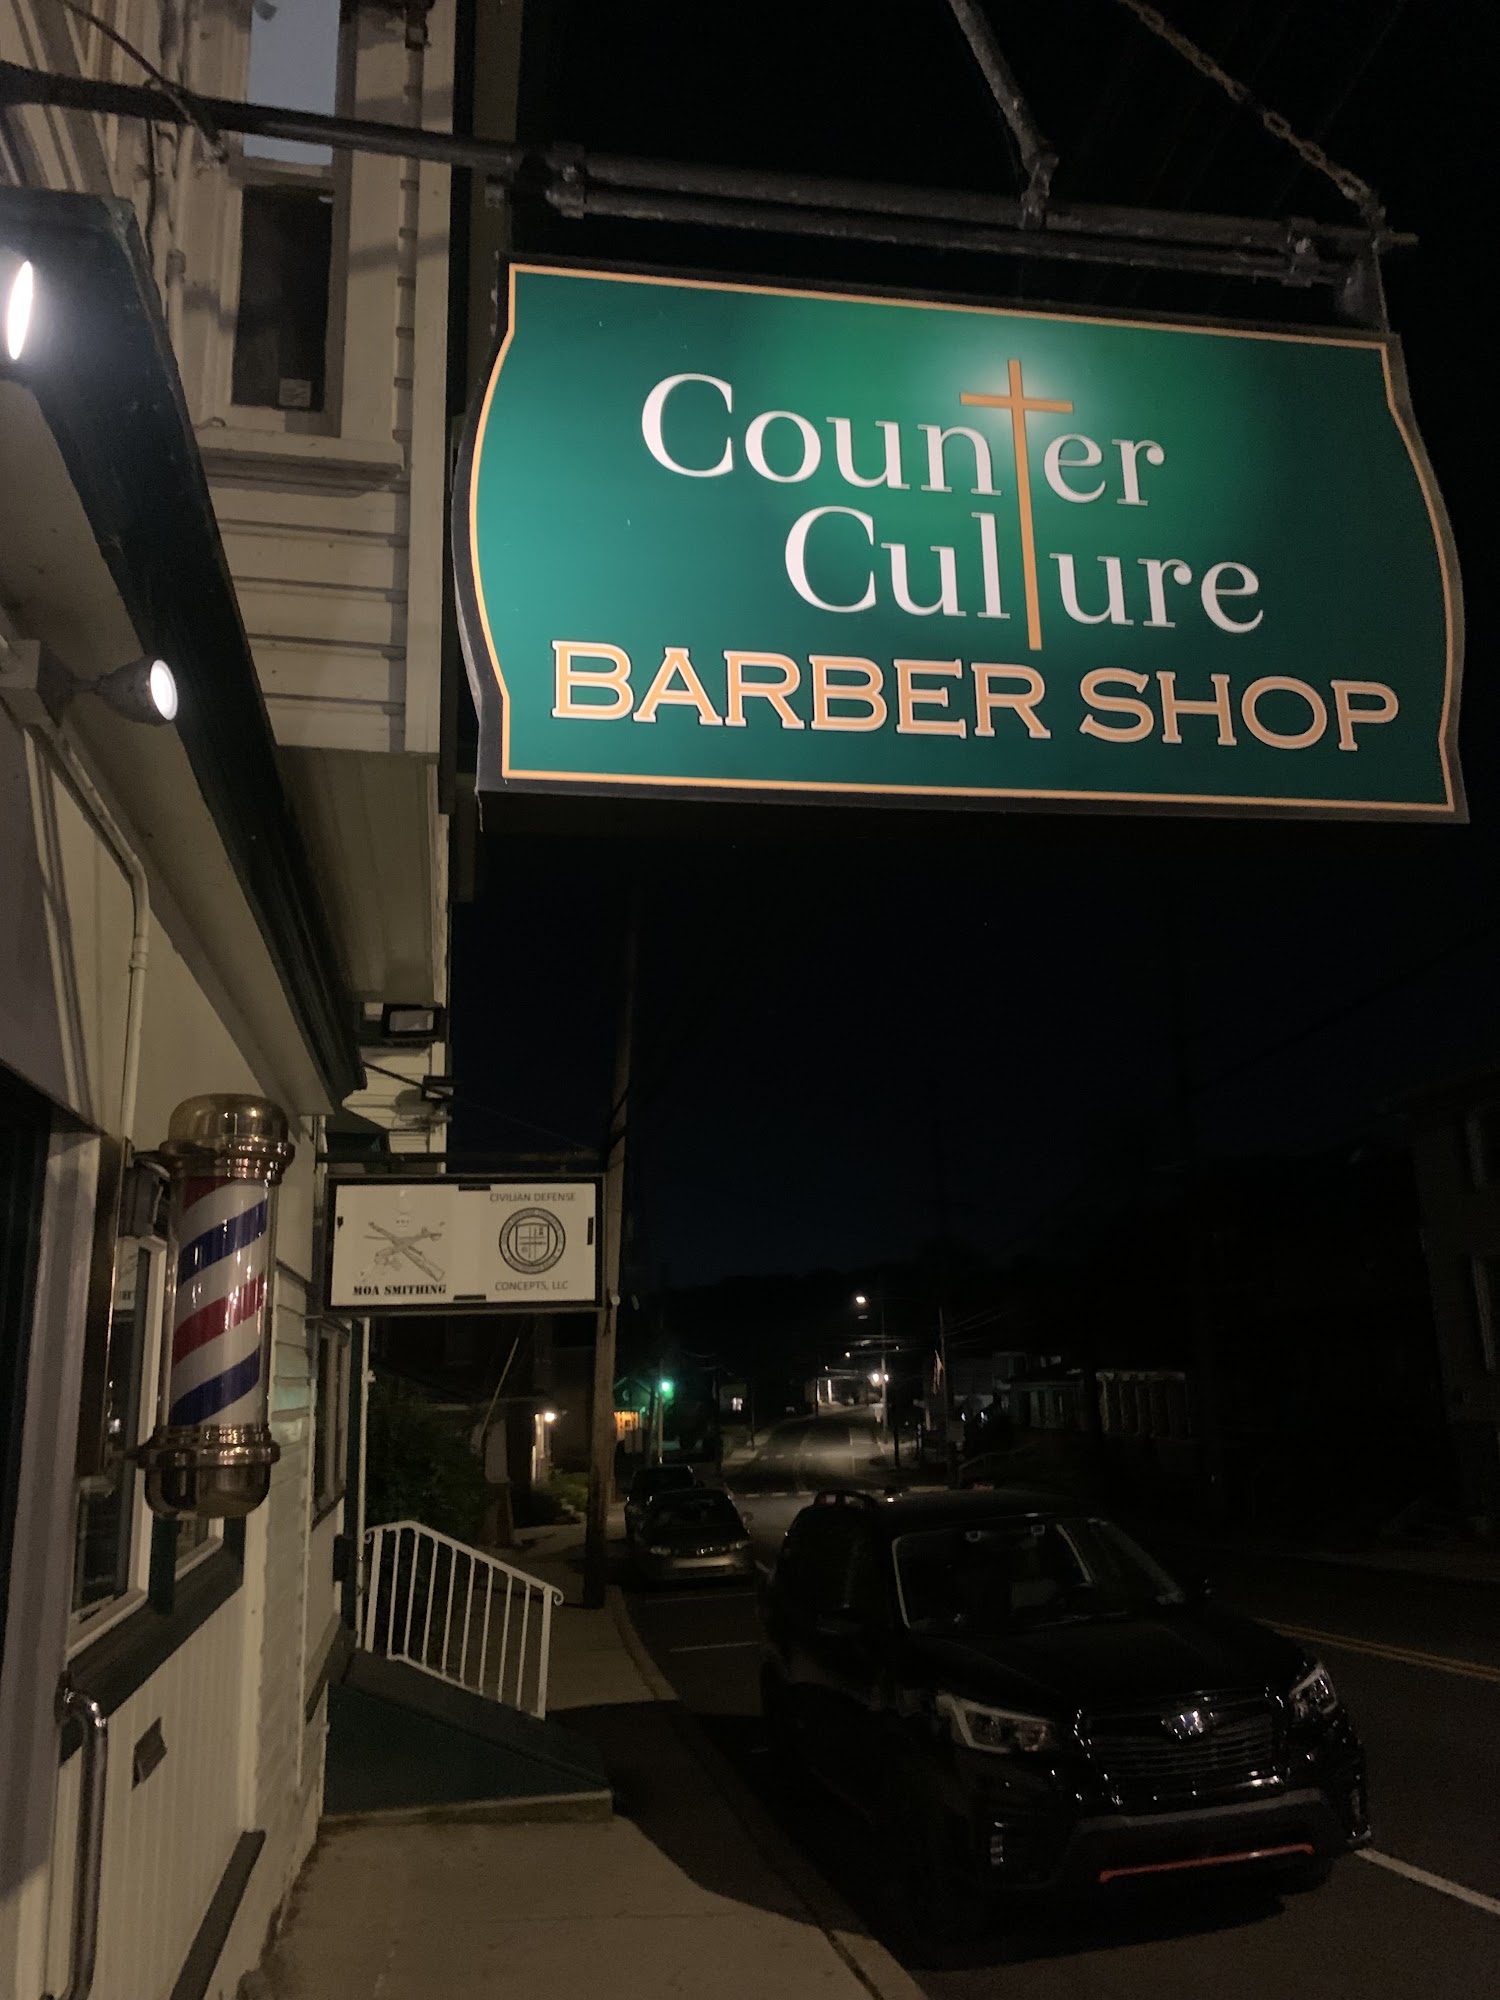 Counter Culture Barbershop 546 Main St, Schwenksville Pennsylvania 19473